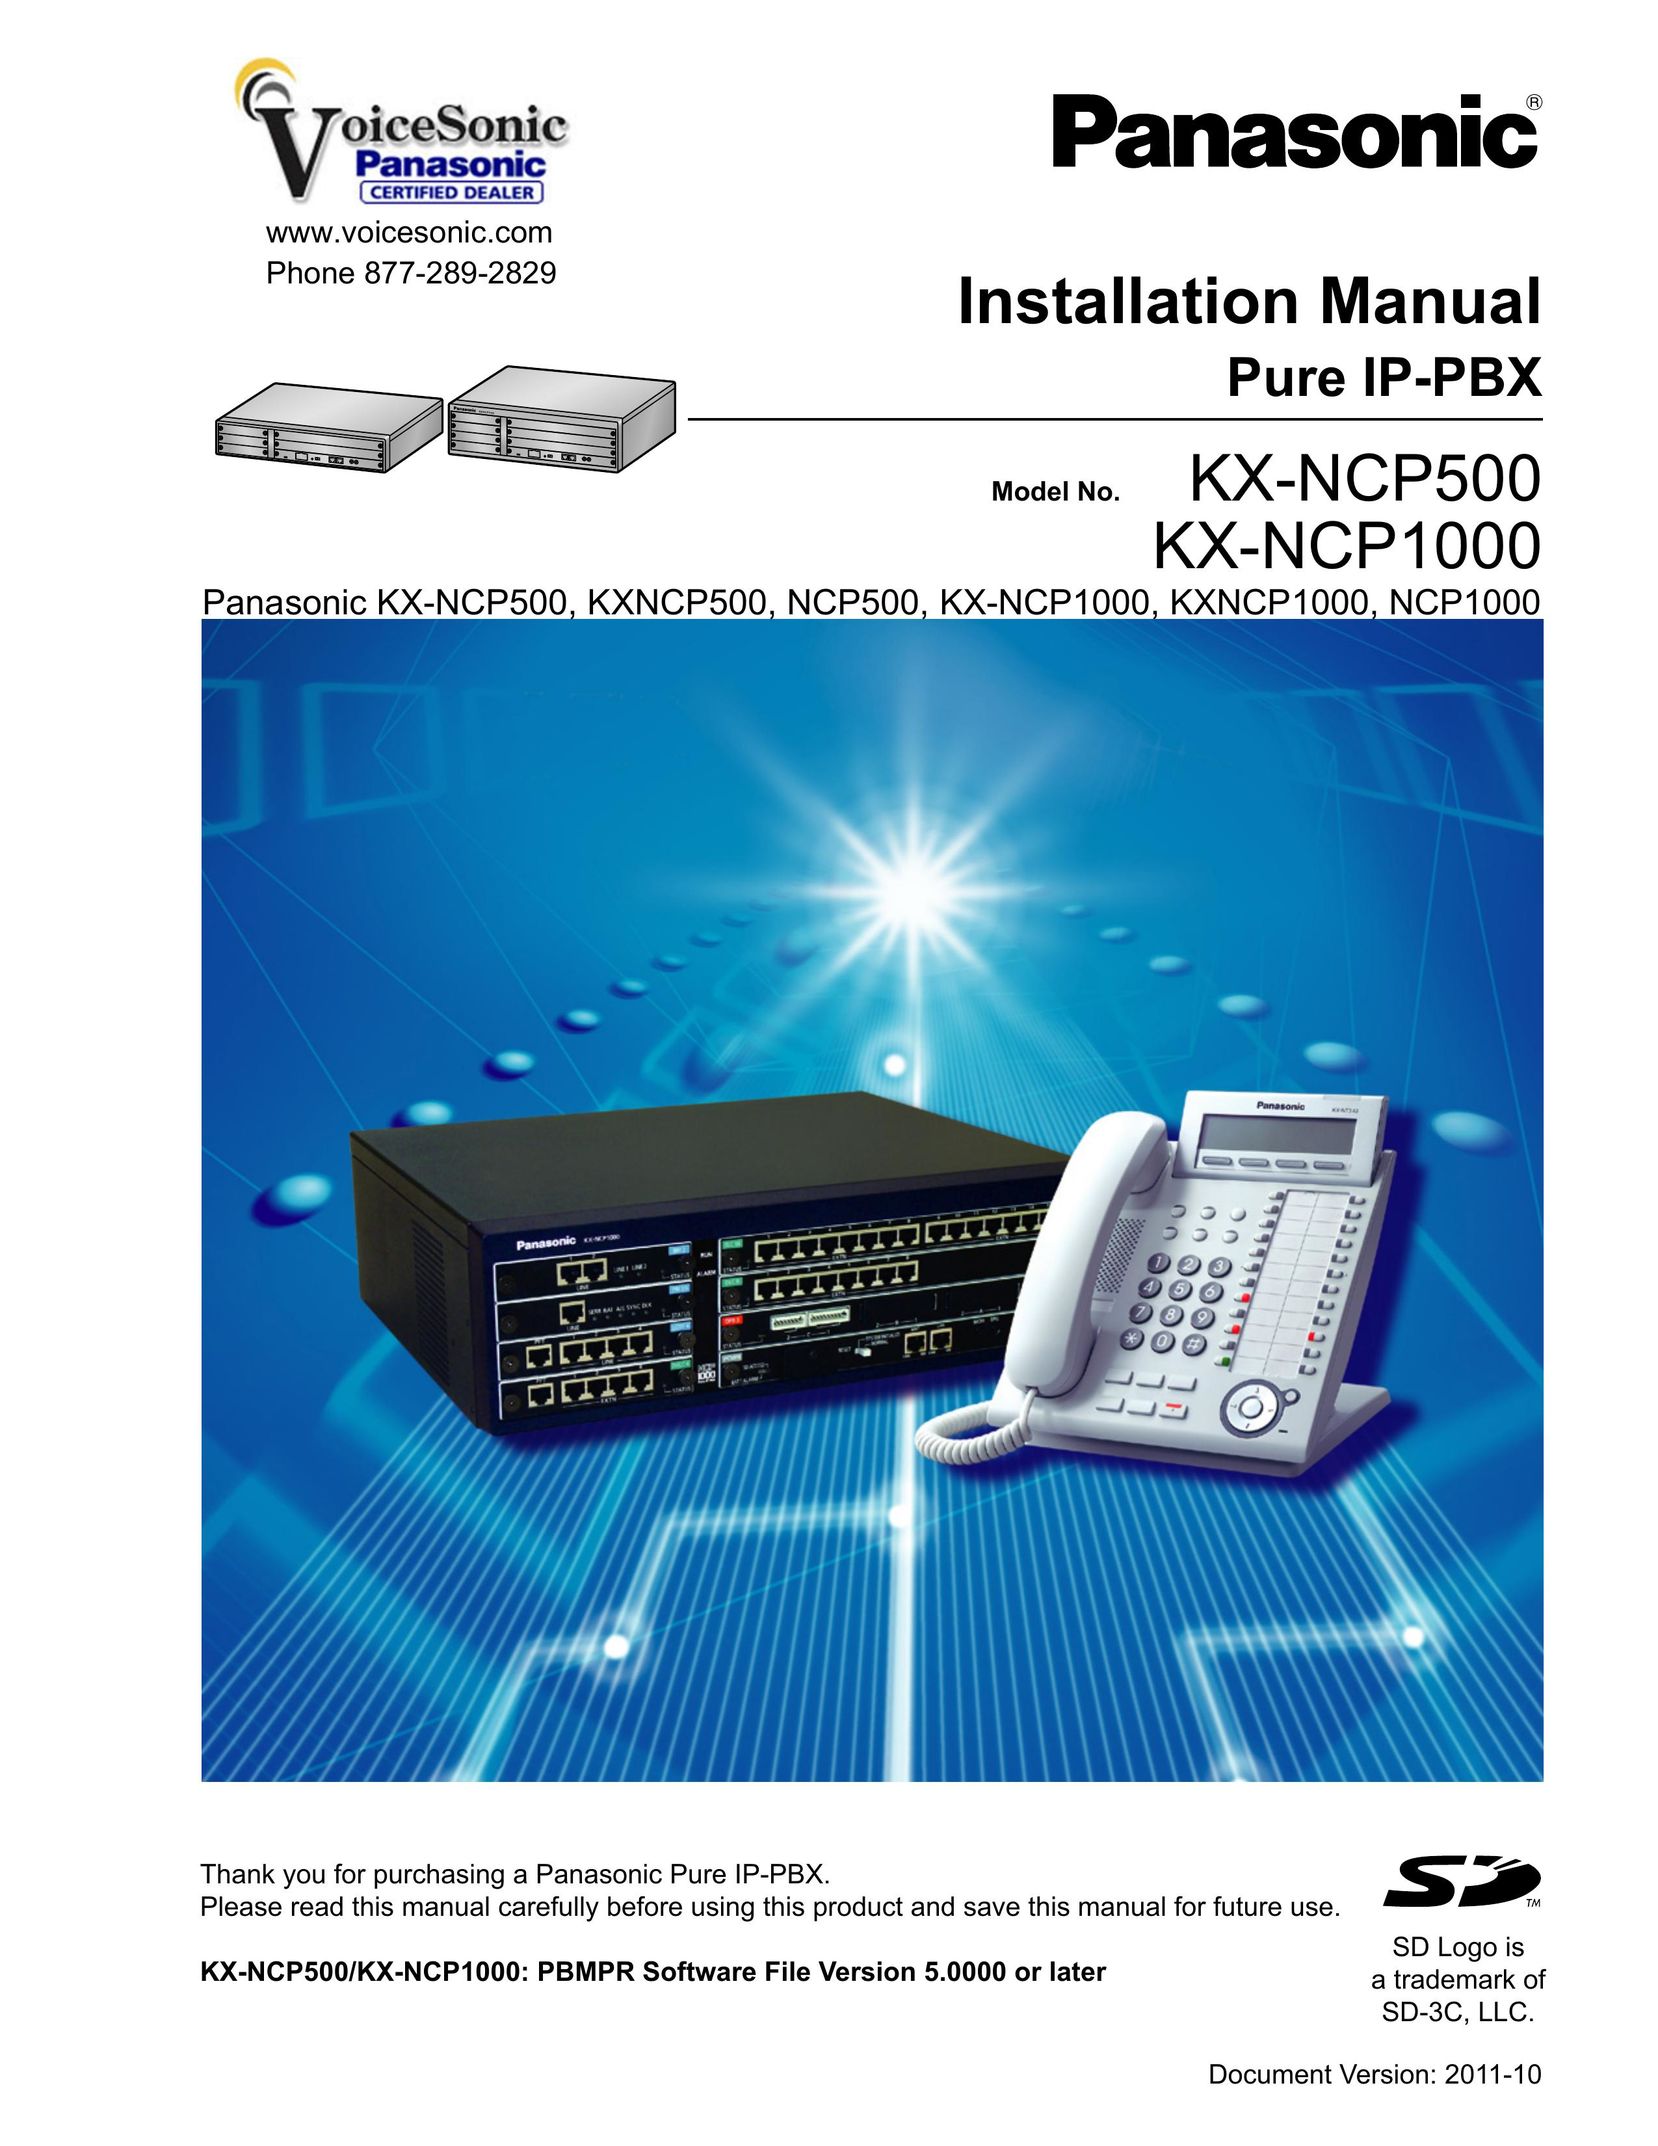 Panasonic KX-NCP1000 Network Hardware User Manual